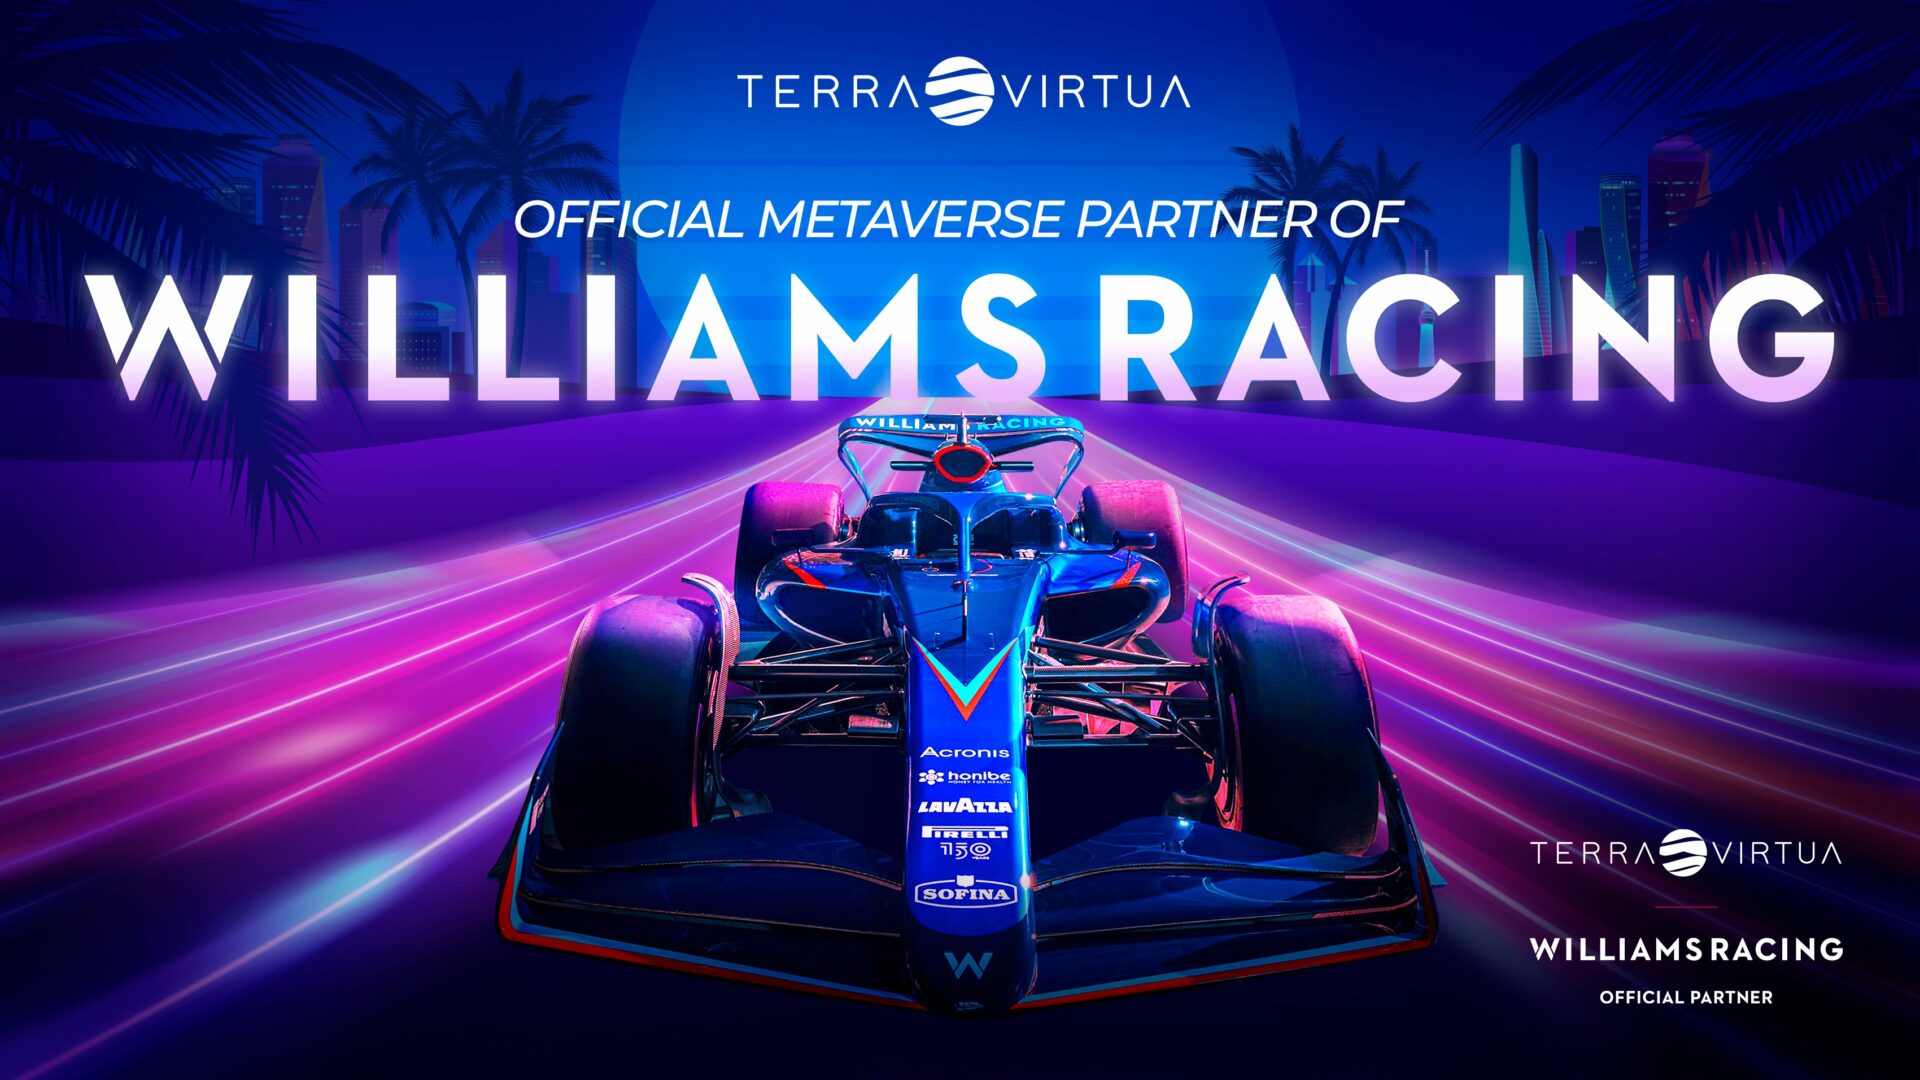 Terra Virtua Williams Racing F1 Formula One Partnership Miami Grand Prix Featured Image Official Metaverse Partner NFT Digital Collectibles Featured Image